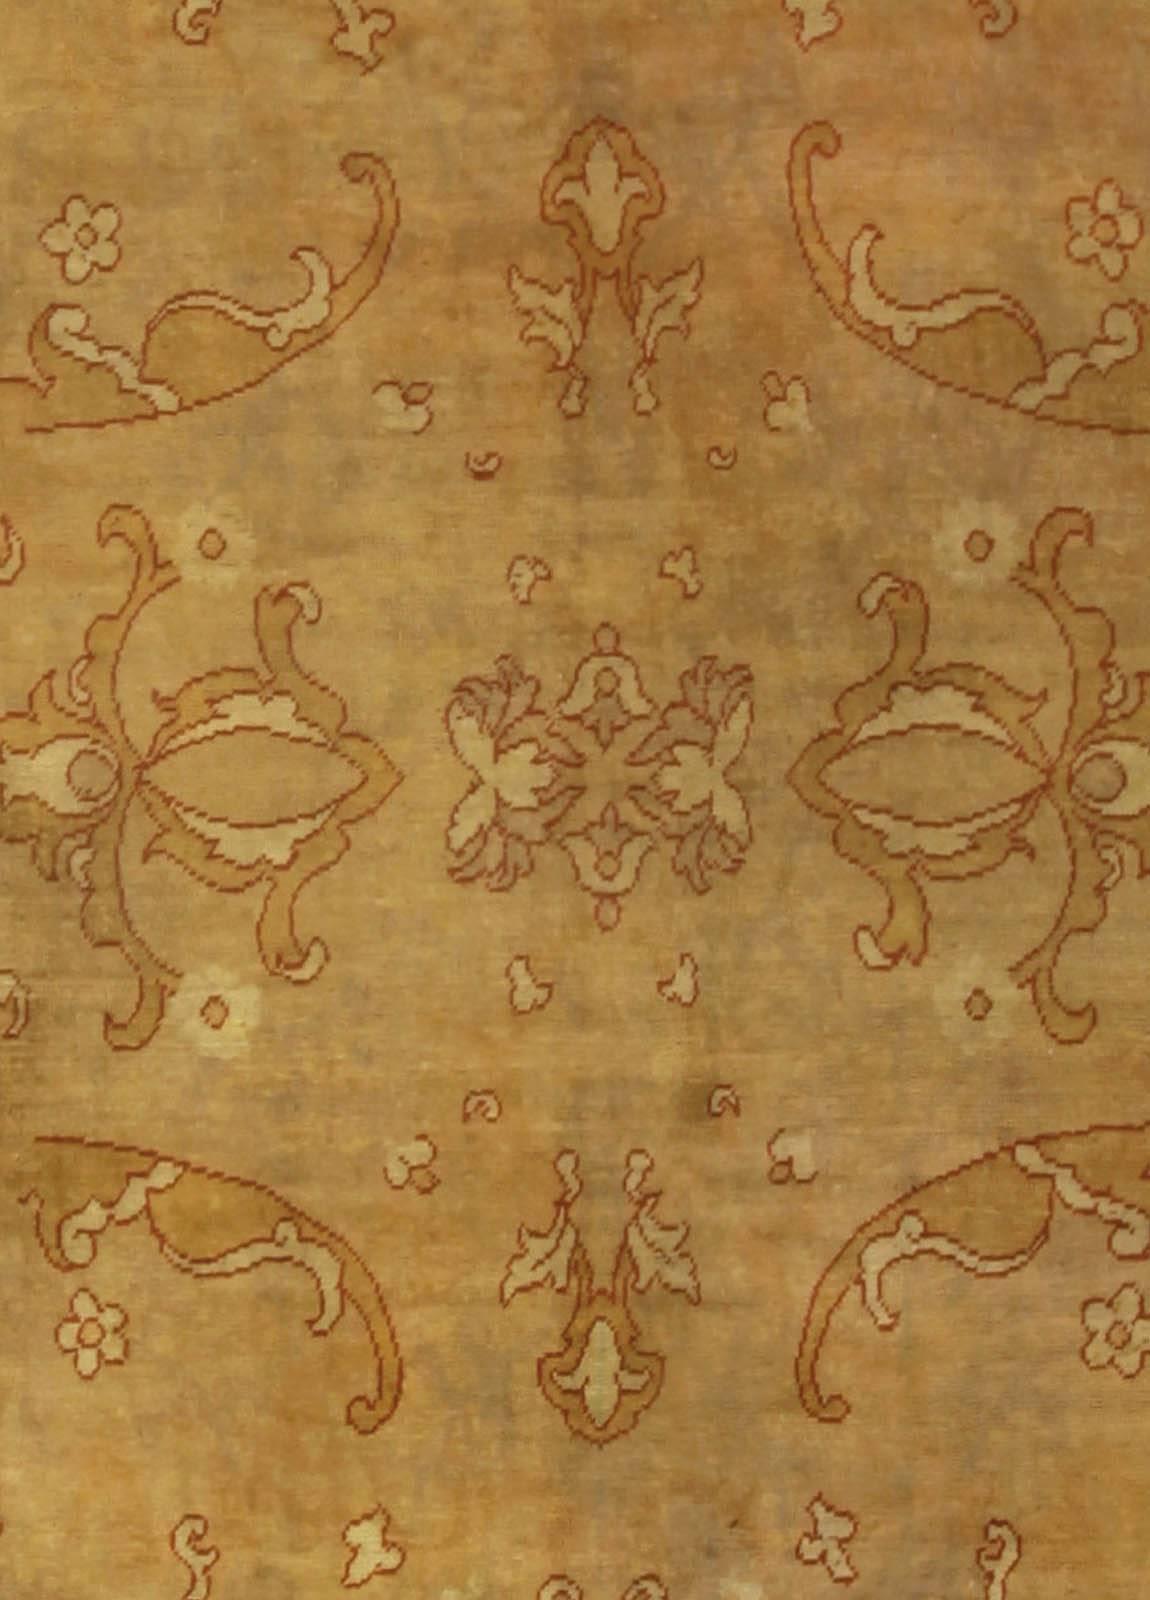 Authentic 1900s Turkish Oushak beige, brown handmade wool rug
Size: 13'0